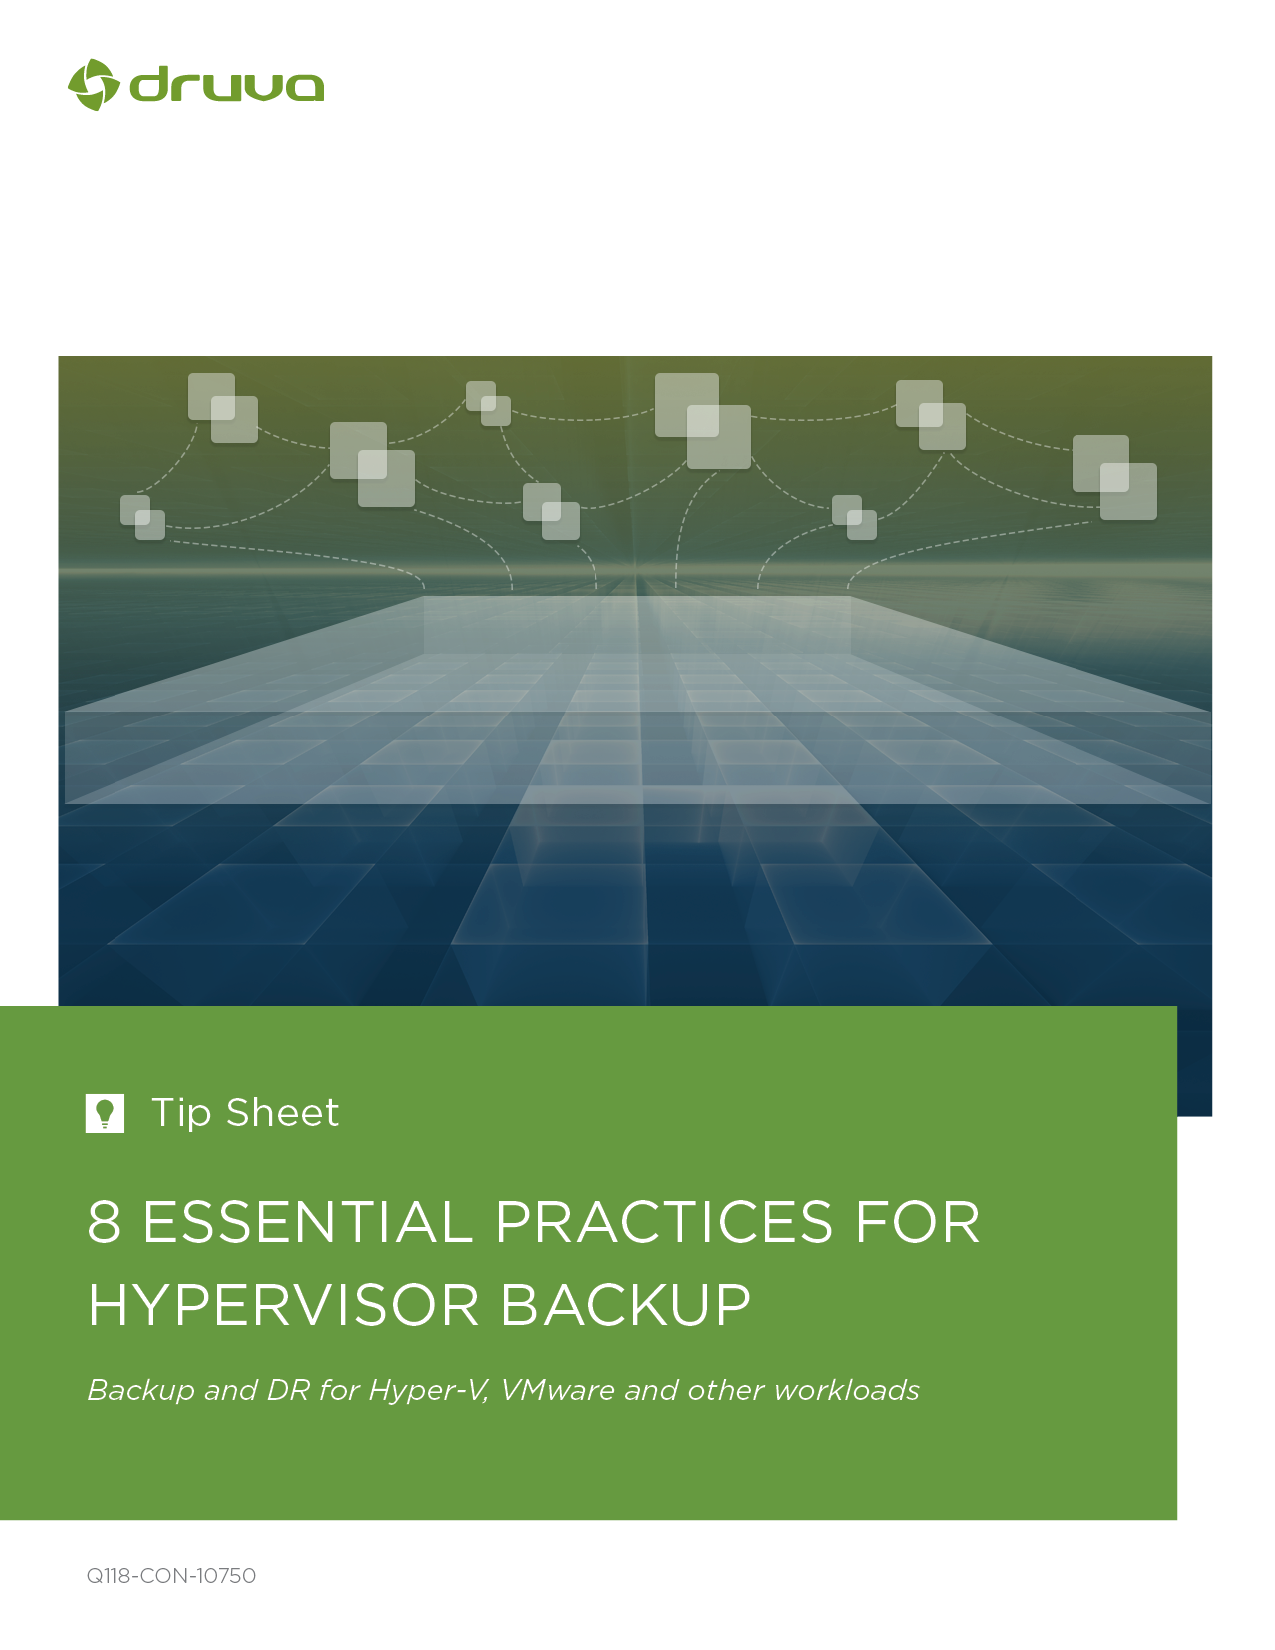 Tip Sheet: 8 Essential Practices for Hypervisor Backup